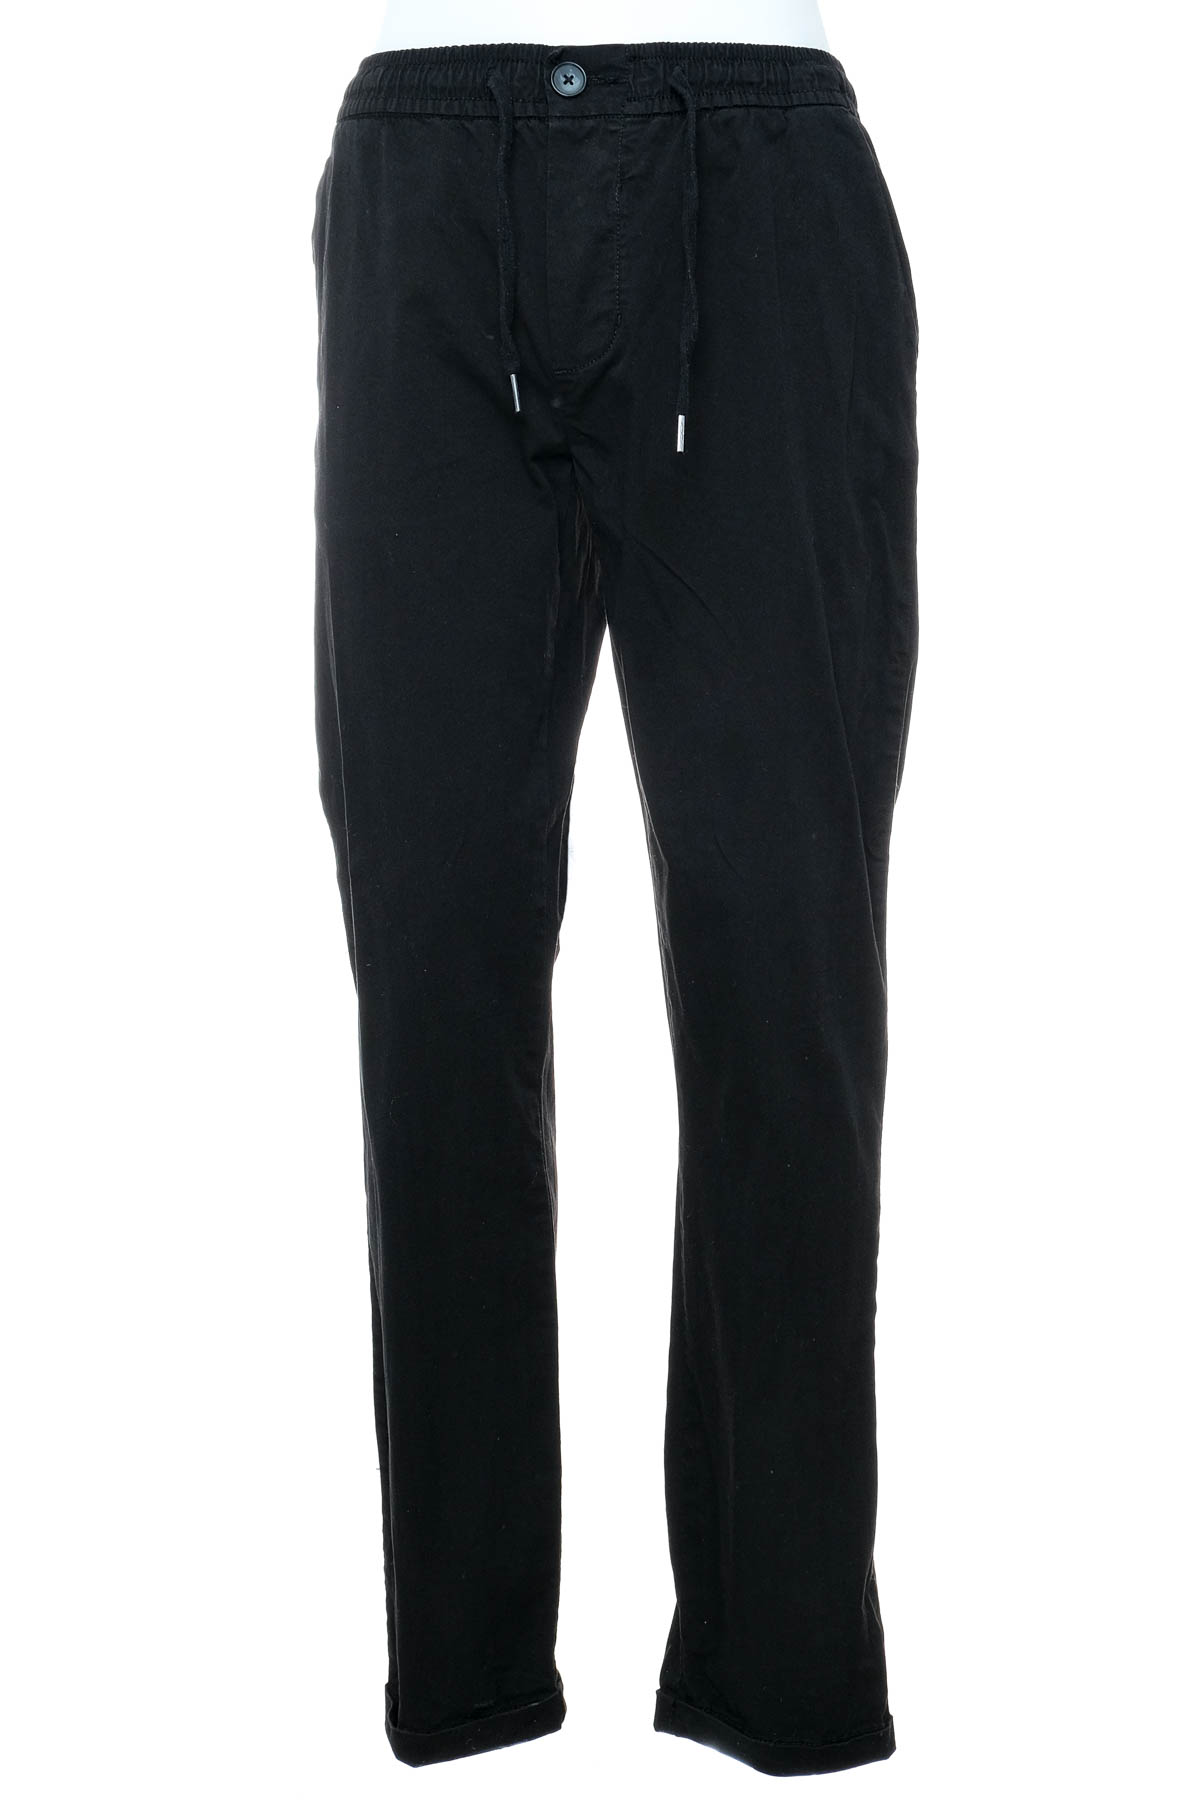 Men's trousers - REDEFINED REBEL - 0